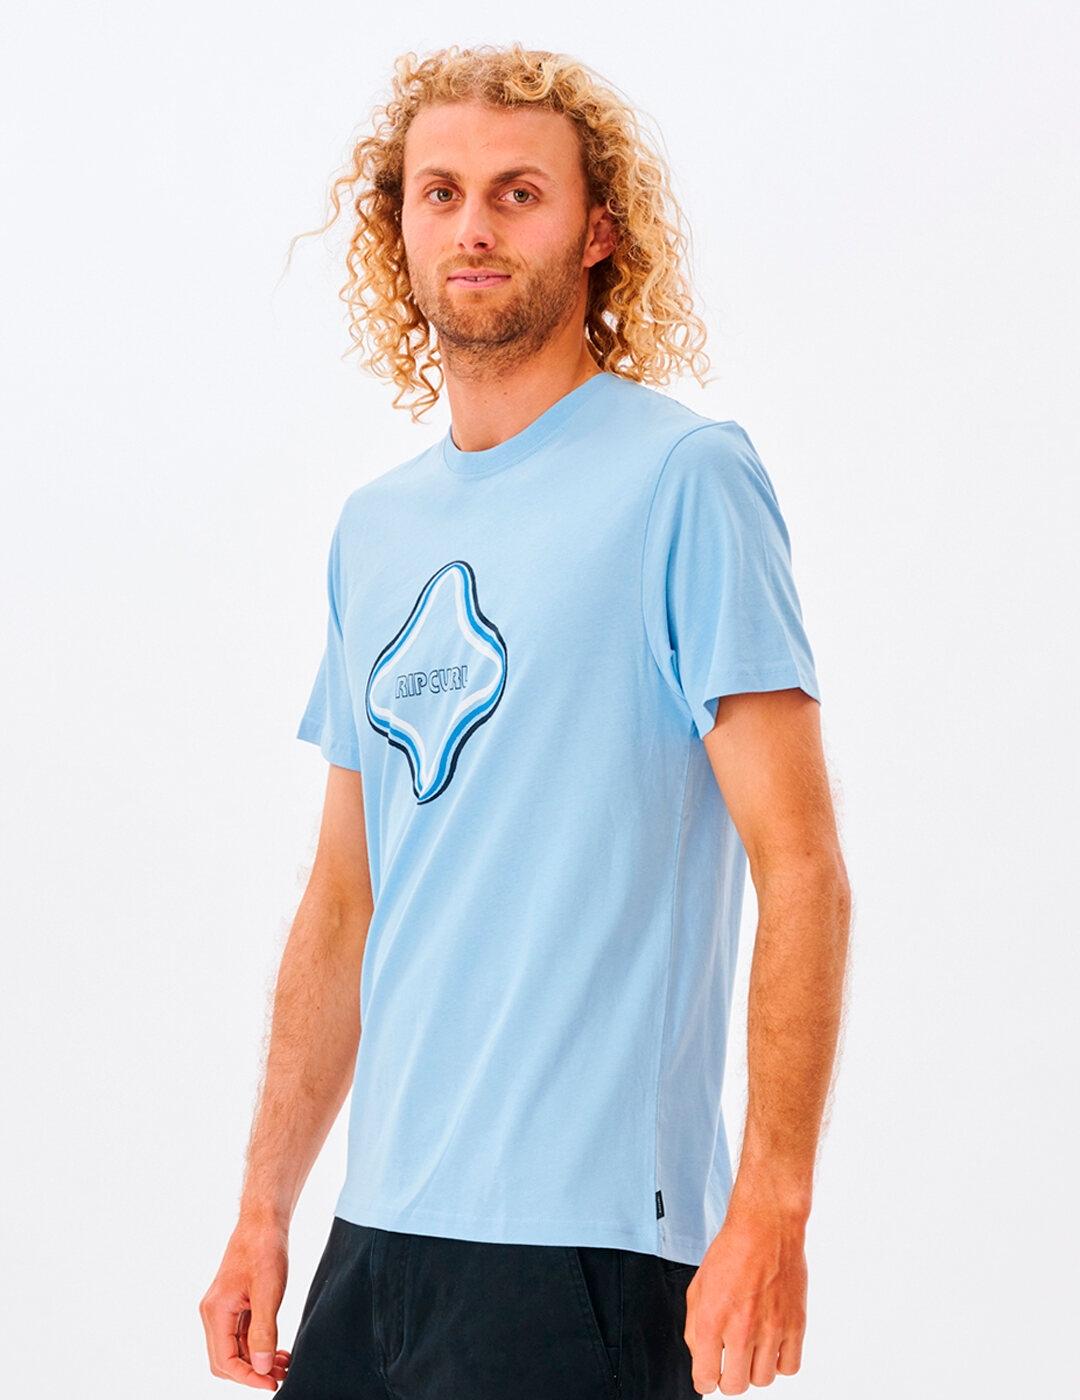 Camiseta SURF REVIVAL VIBRATIONS - Bells Blue